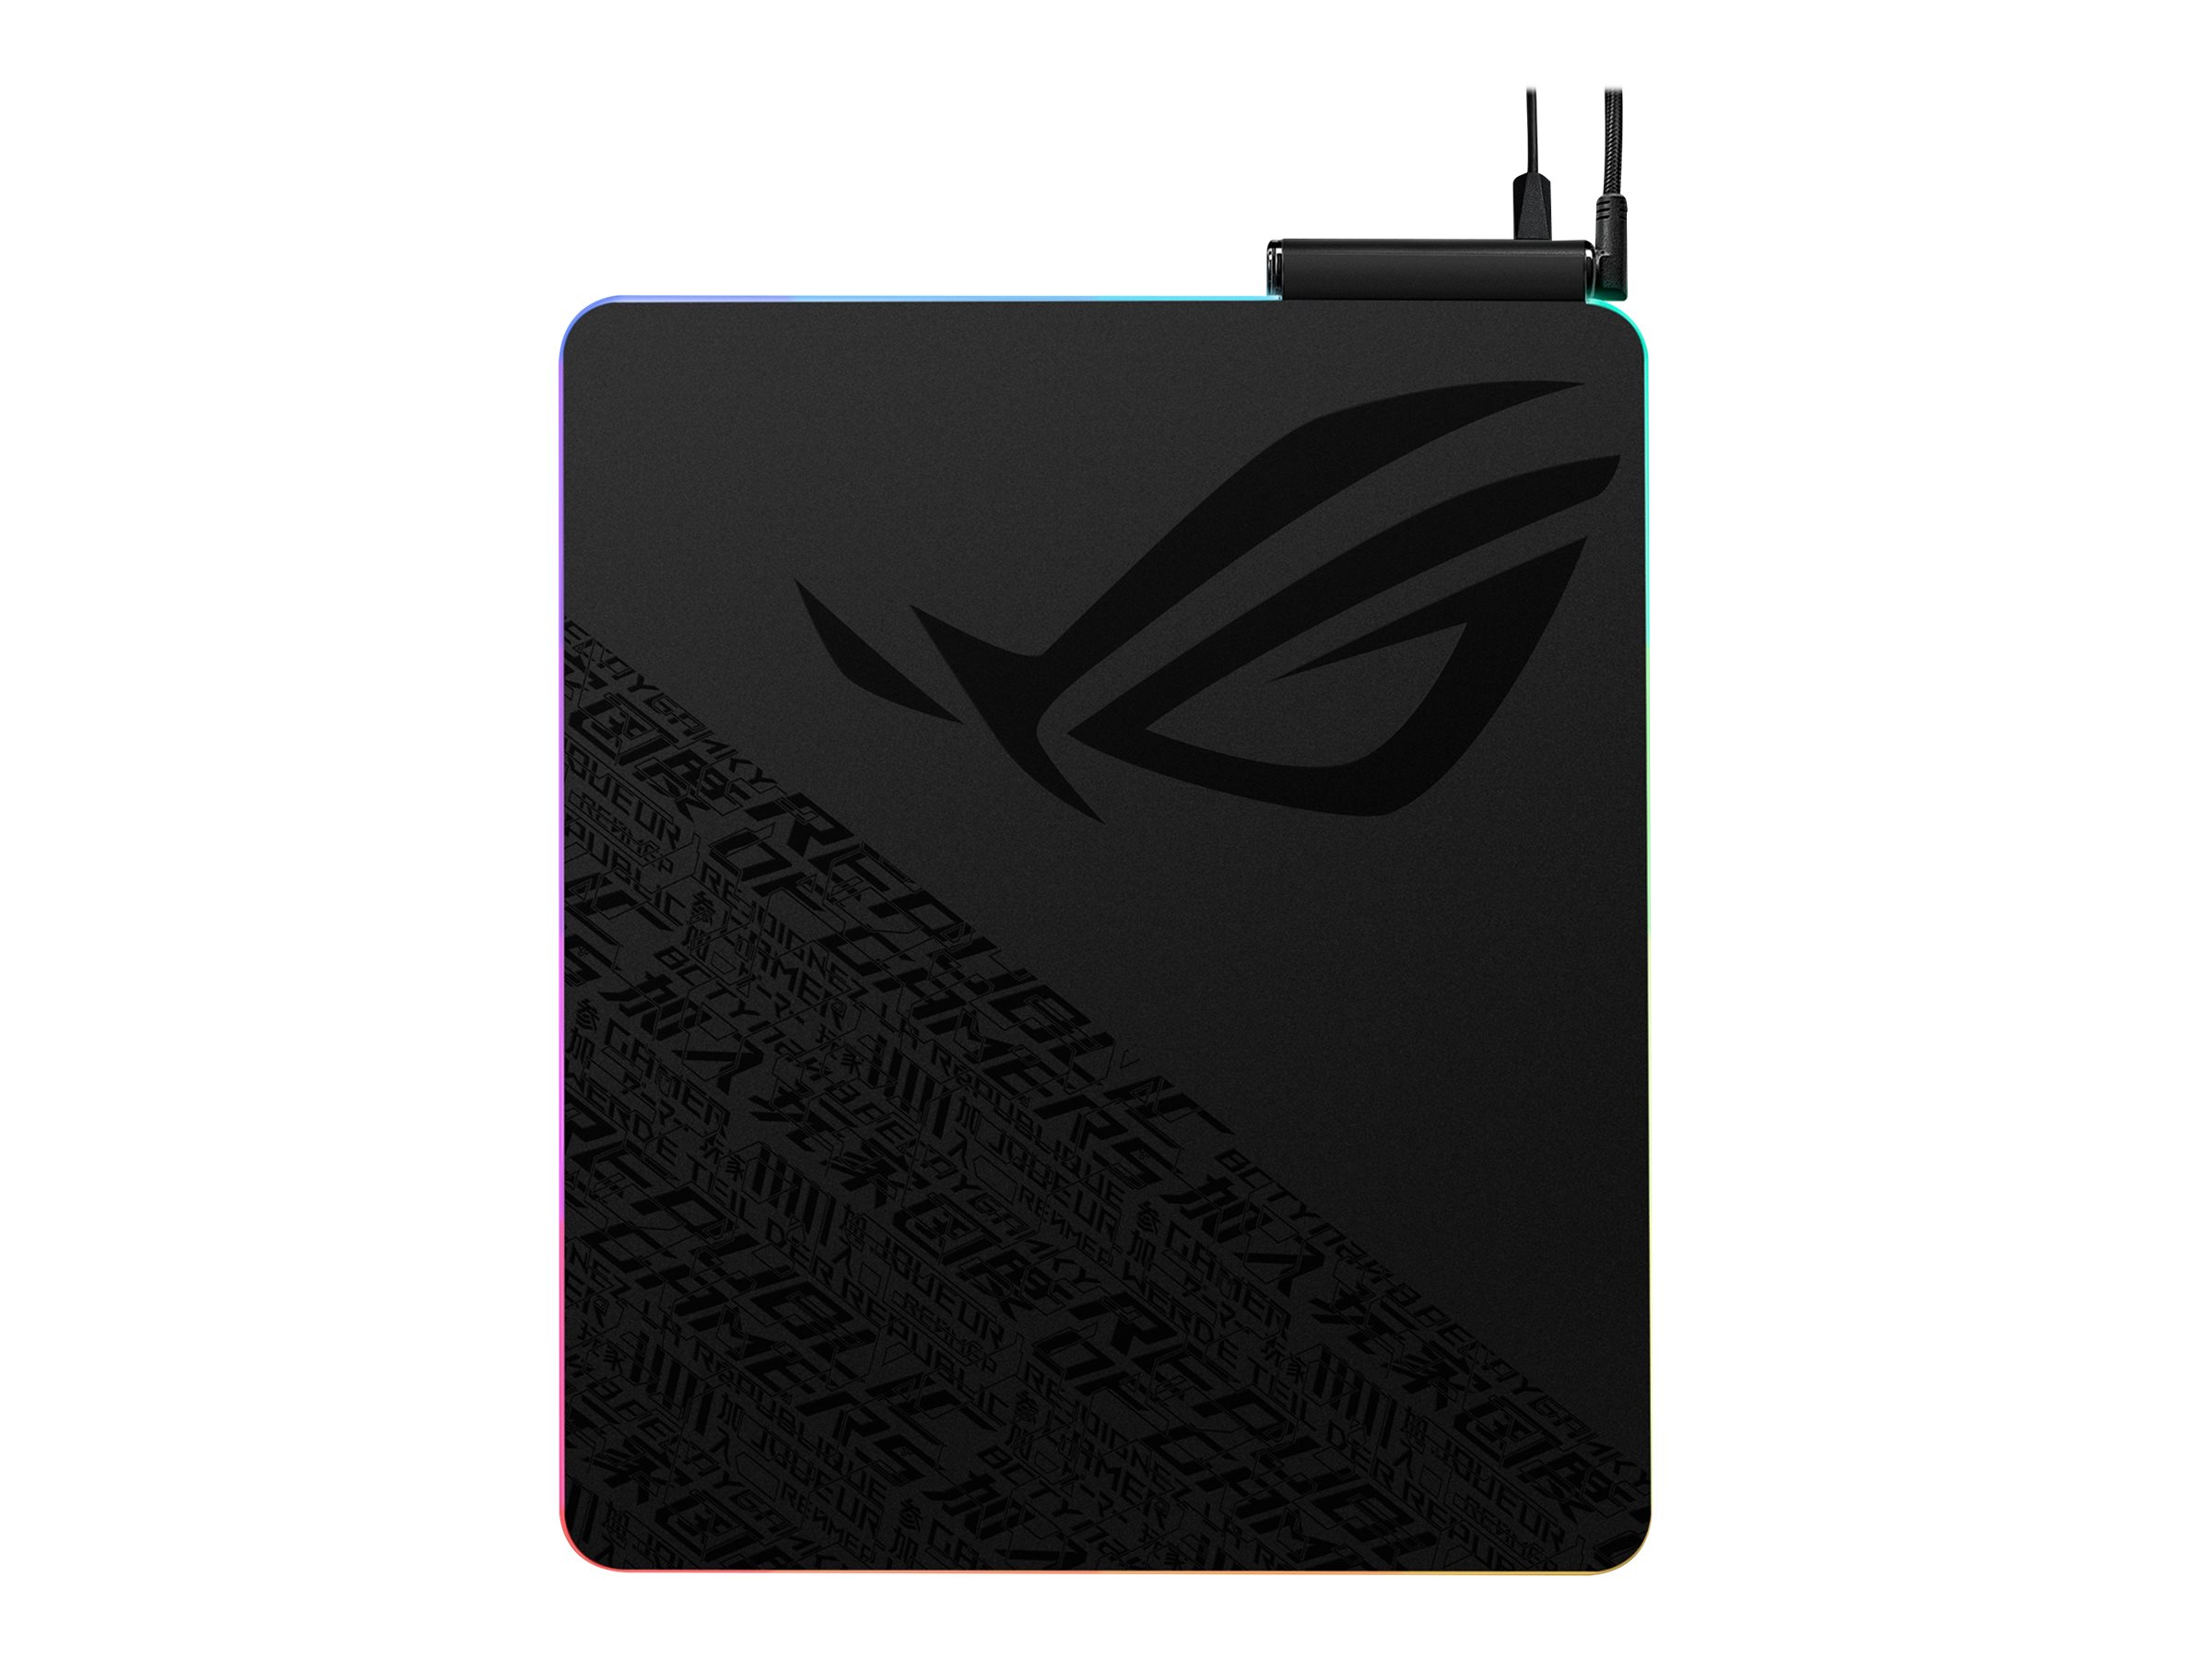 ASUS ROG Balteus QI RGB Gaming Mauspad - schwarz